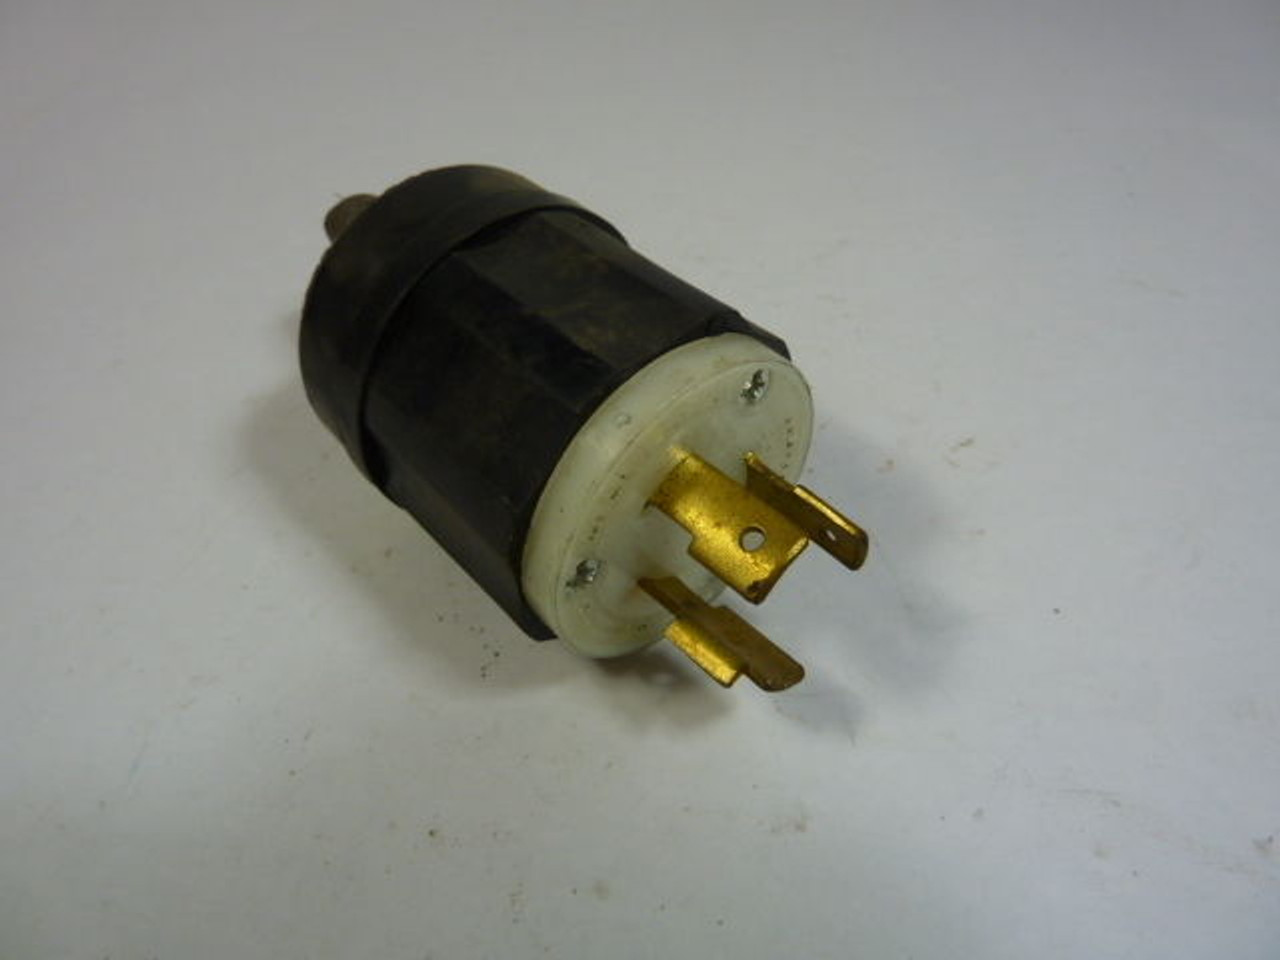 Leviton L9-20P Turn Lock Male Plug 20A 600VAC USED